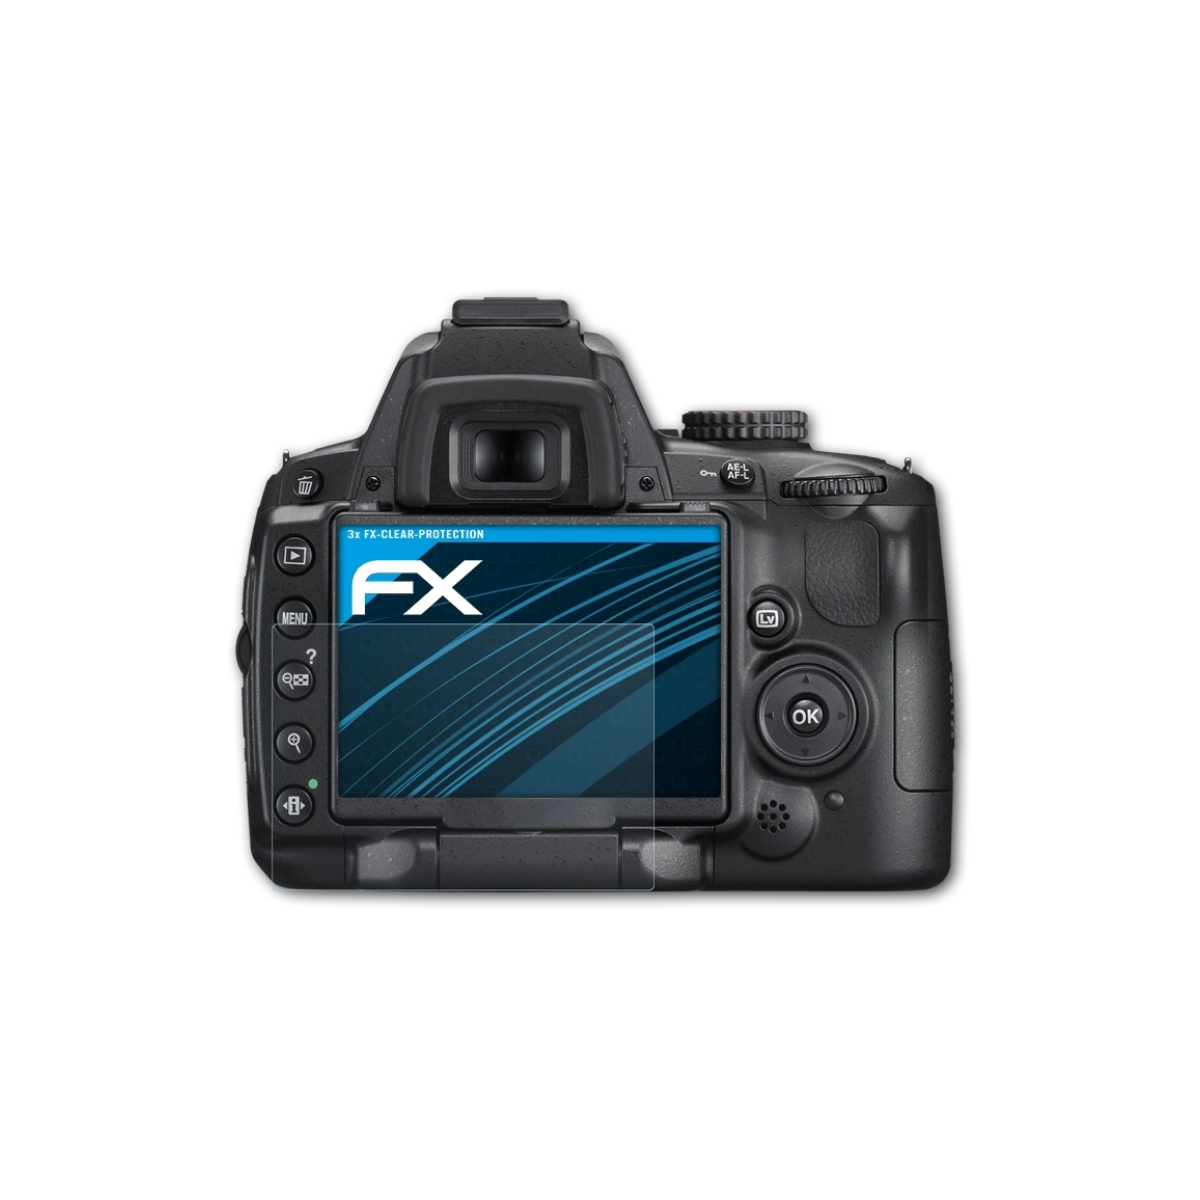 ATFOLIX Displayschutz(für 3x D5000) FX-Clear Nikon